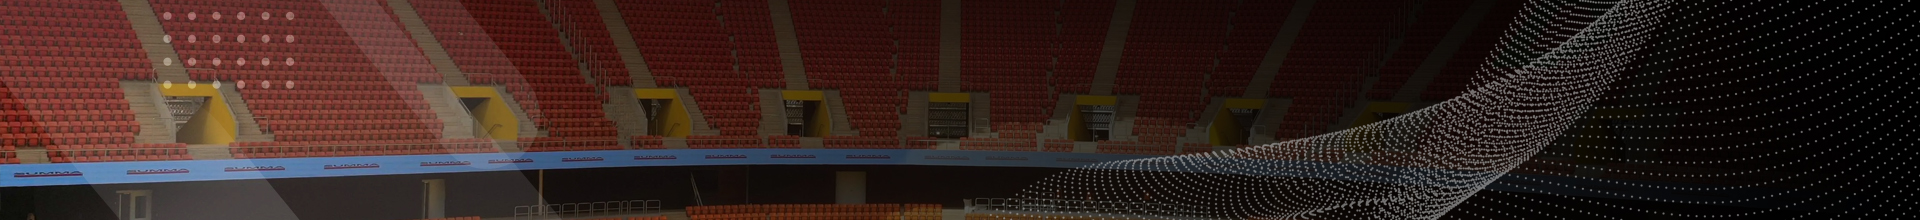 Simko Seating - Sport / Stadium Seats